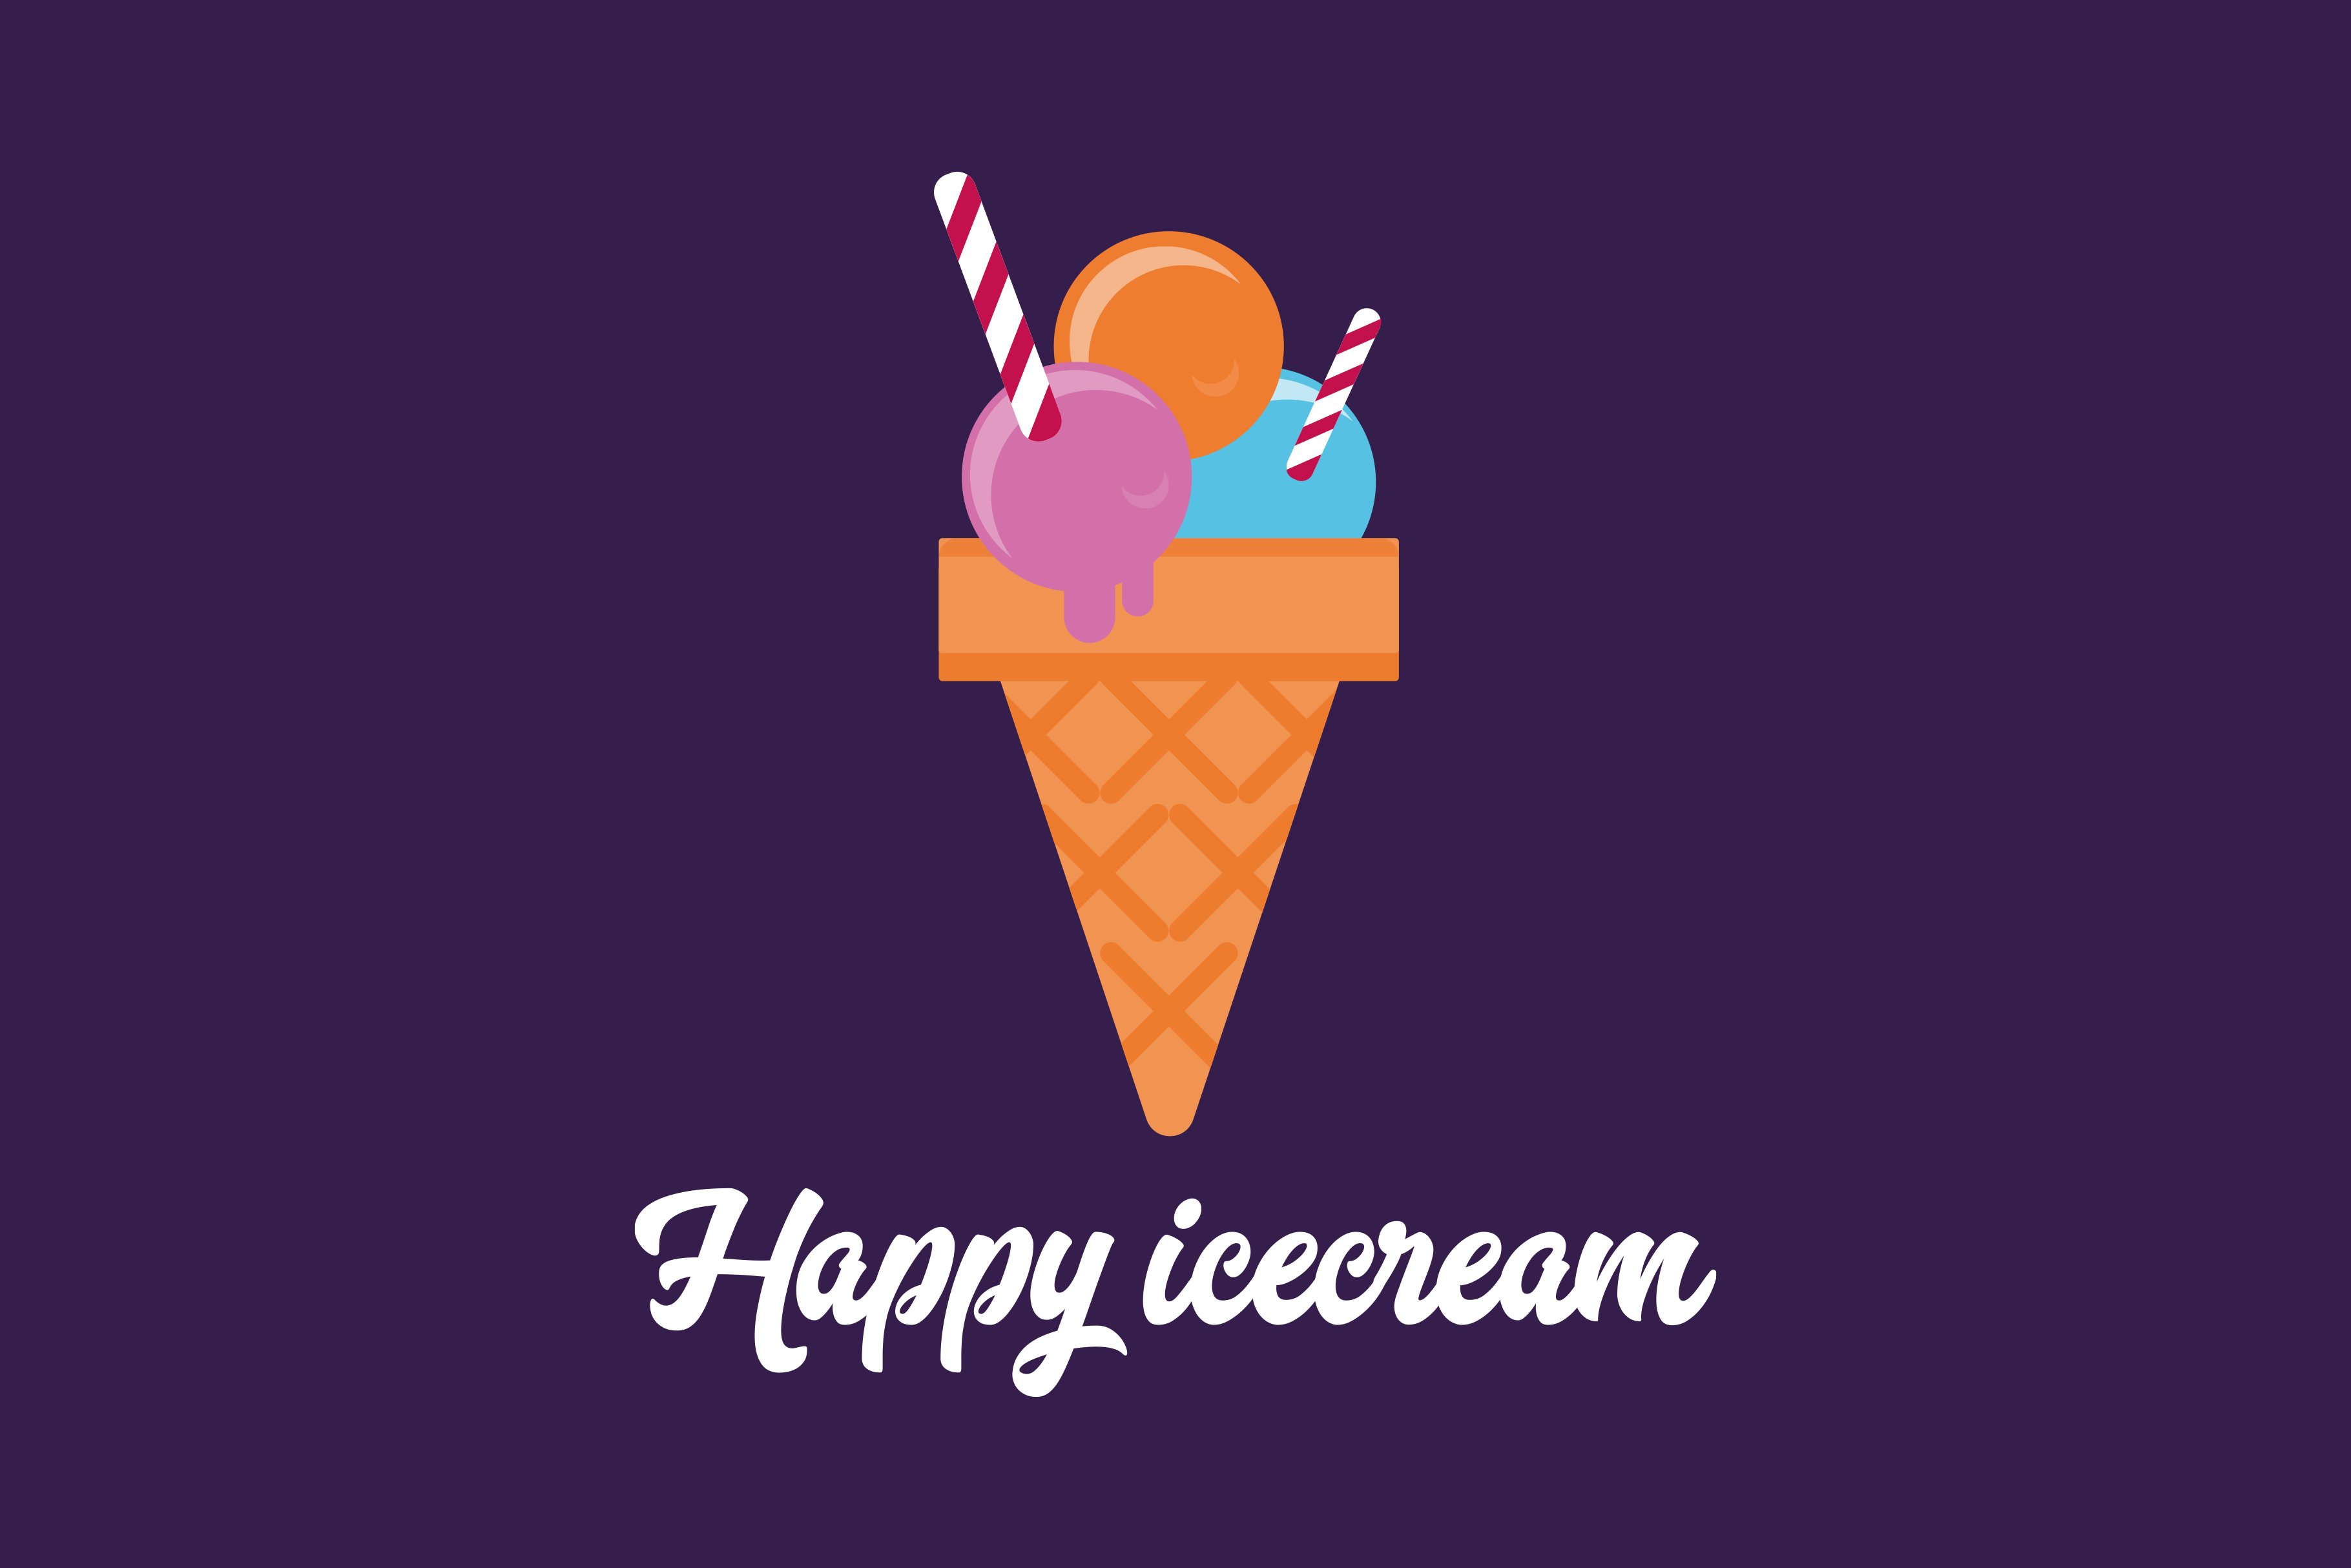 Ice cream illustration cover image.